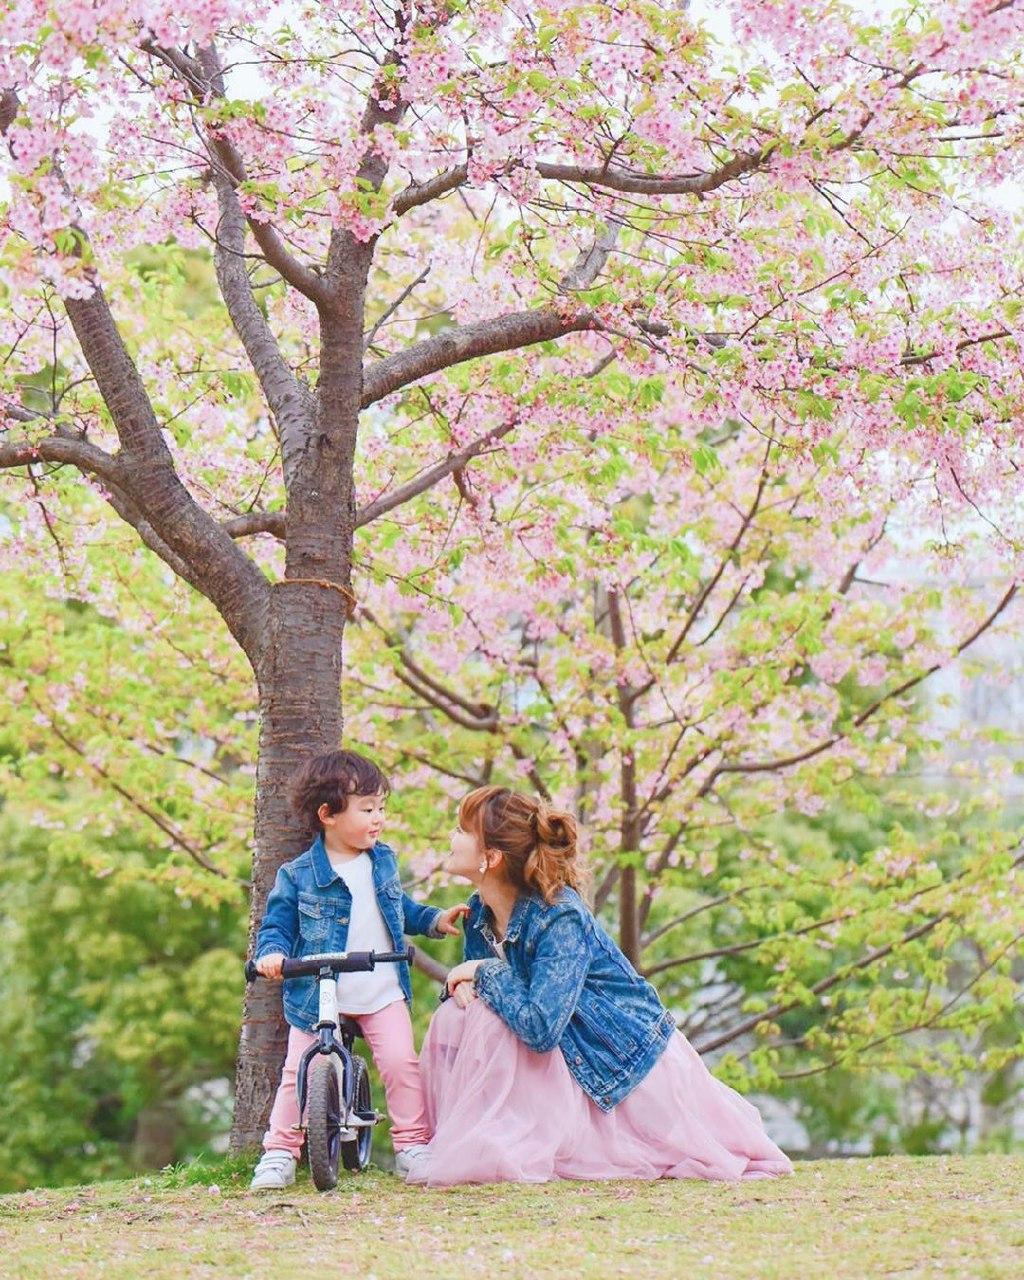 kasai rinkai park cherry blossom